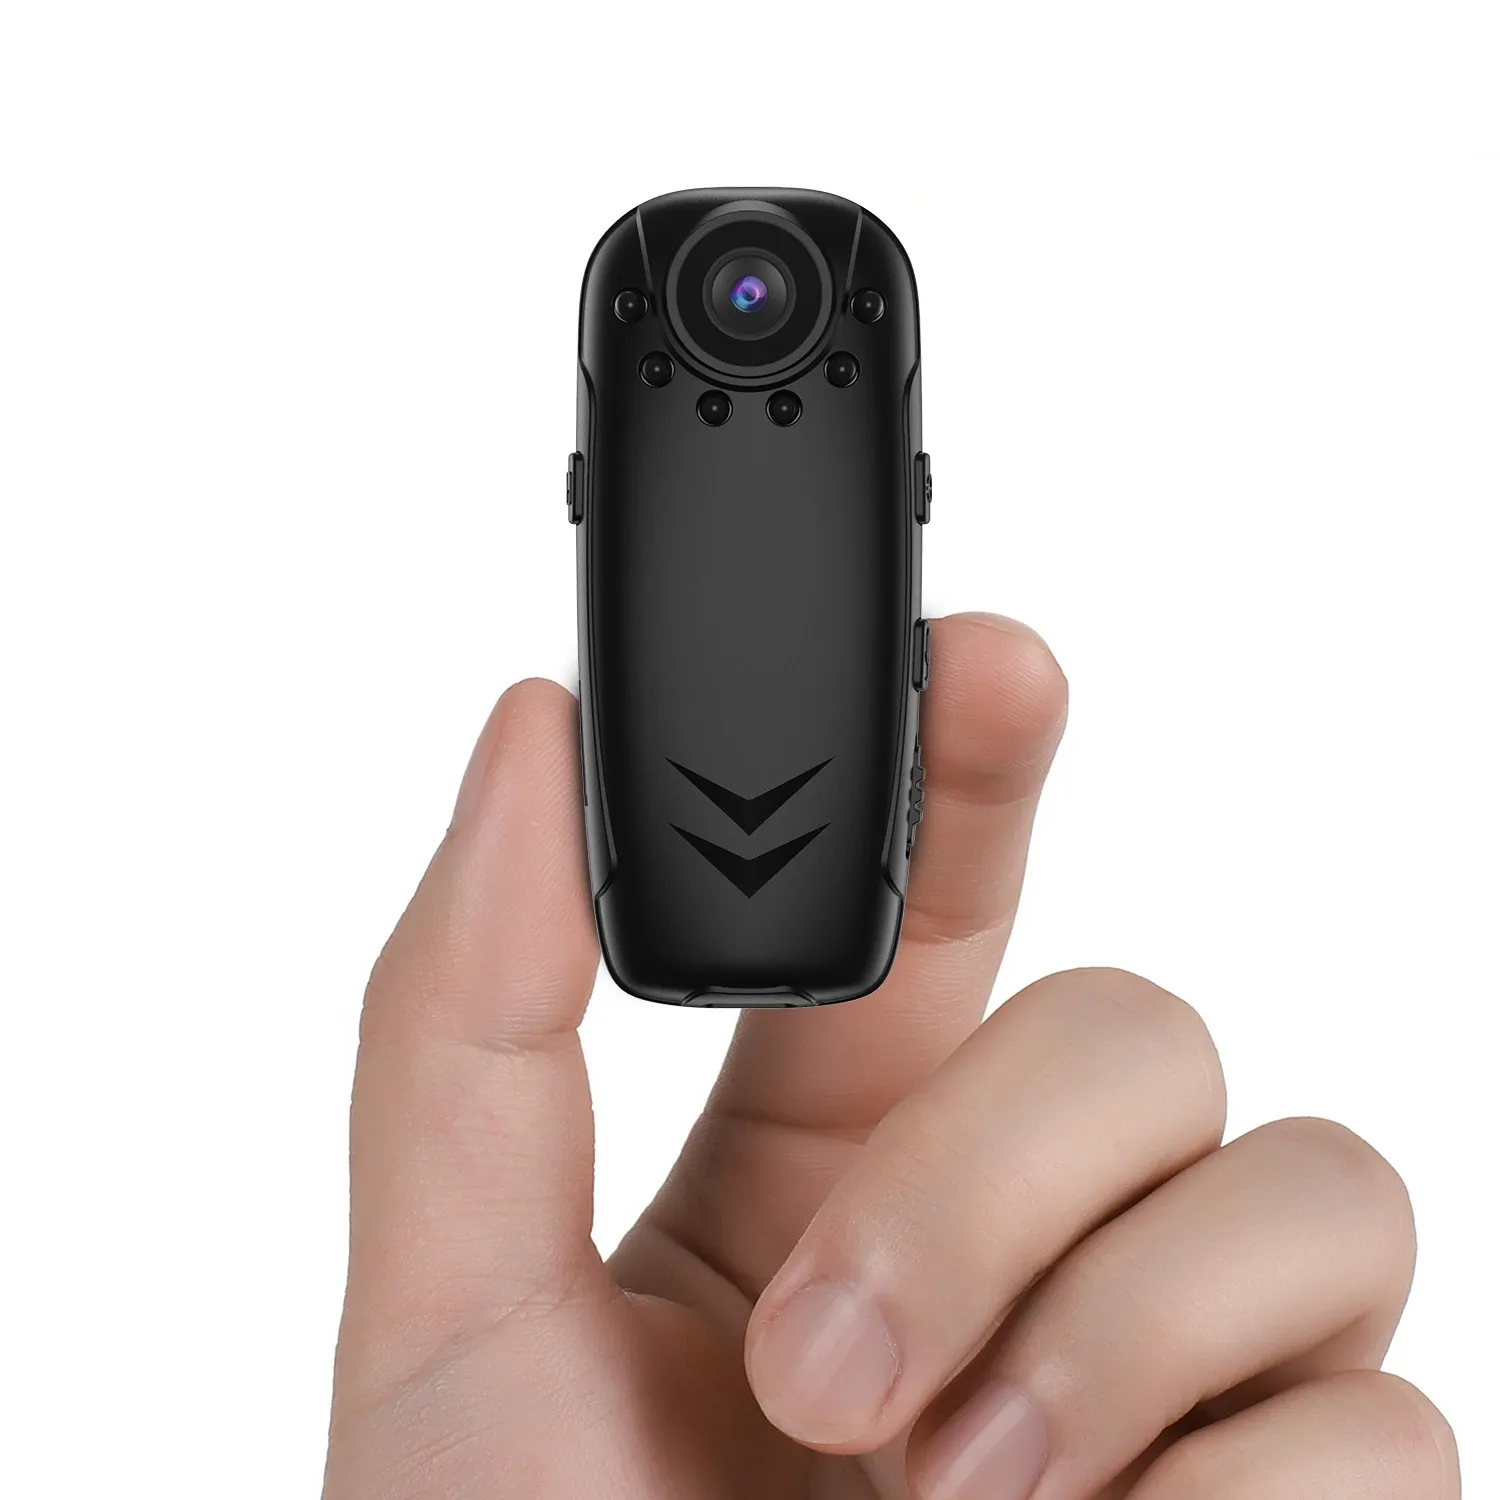 Cameras Mini HD Action Camera Portable Body Cam 1080p Intrared Night Vision Video Video Recording Sport DV Clips Small Camcorder Police